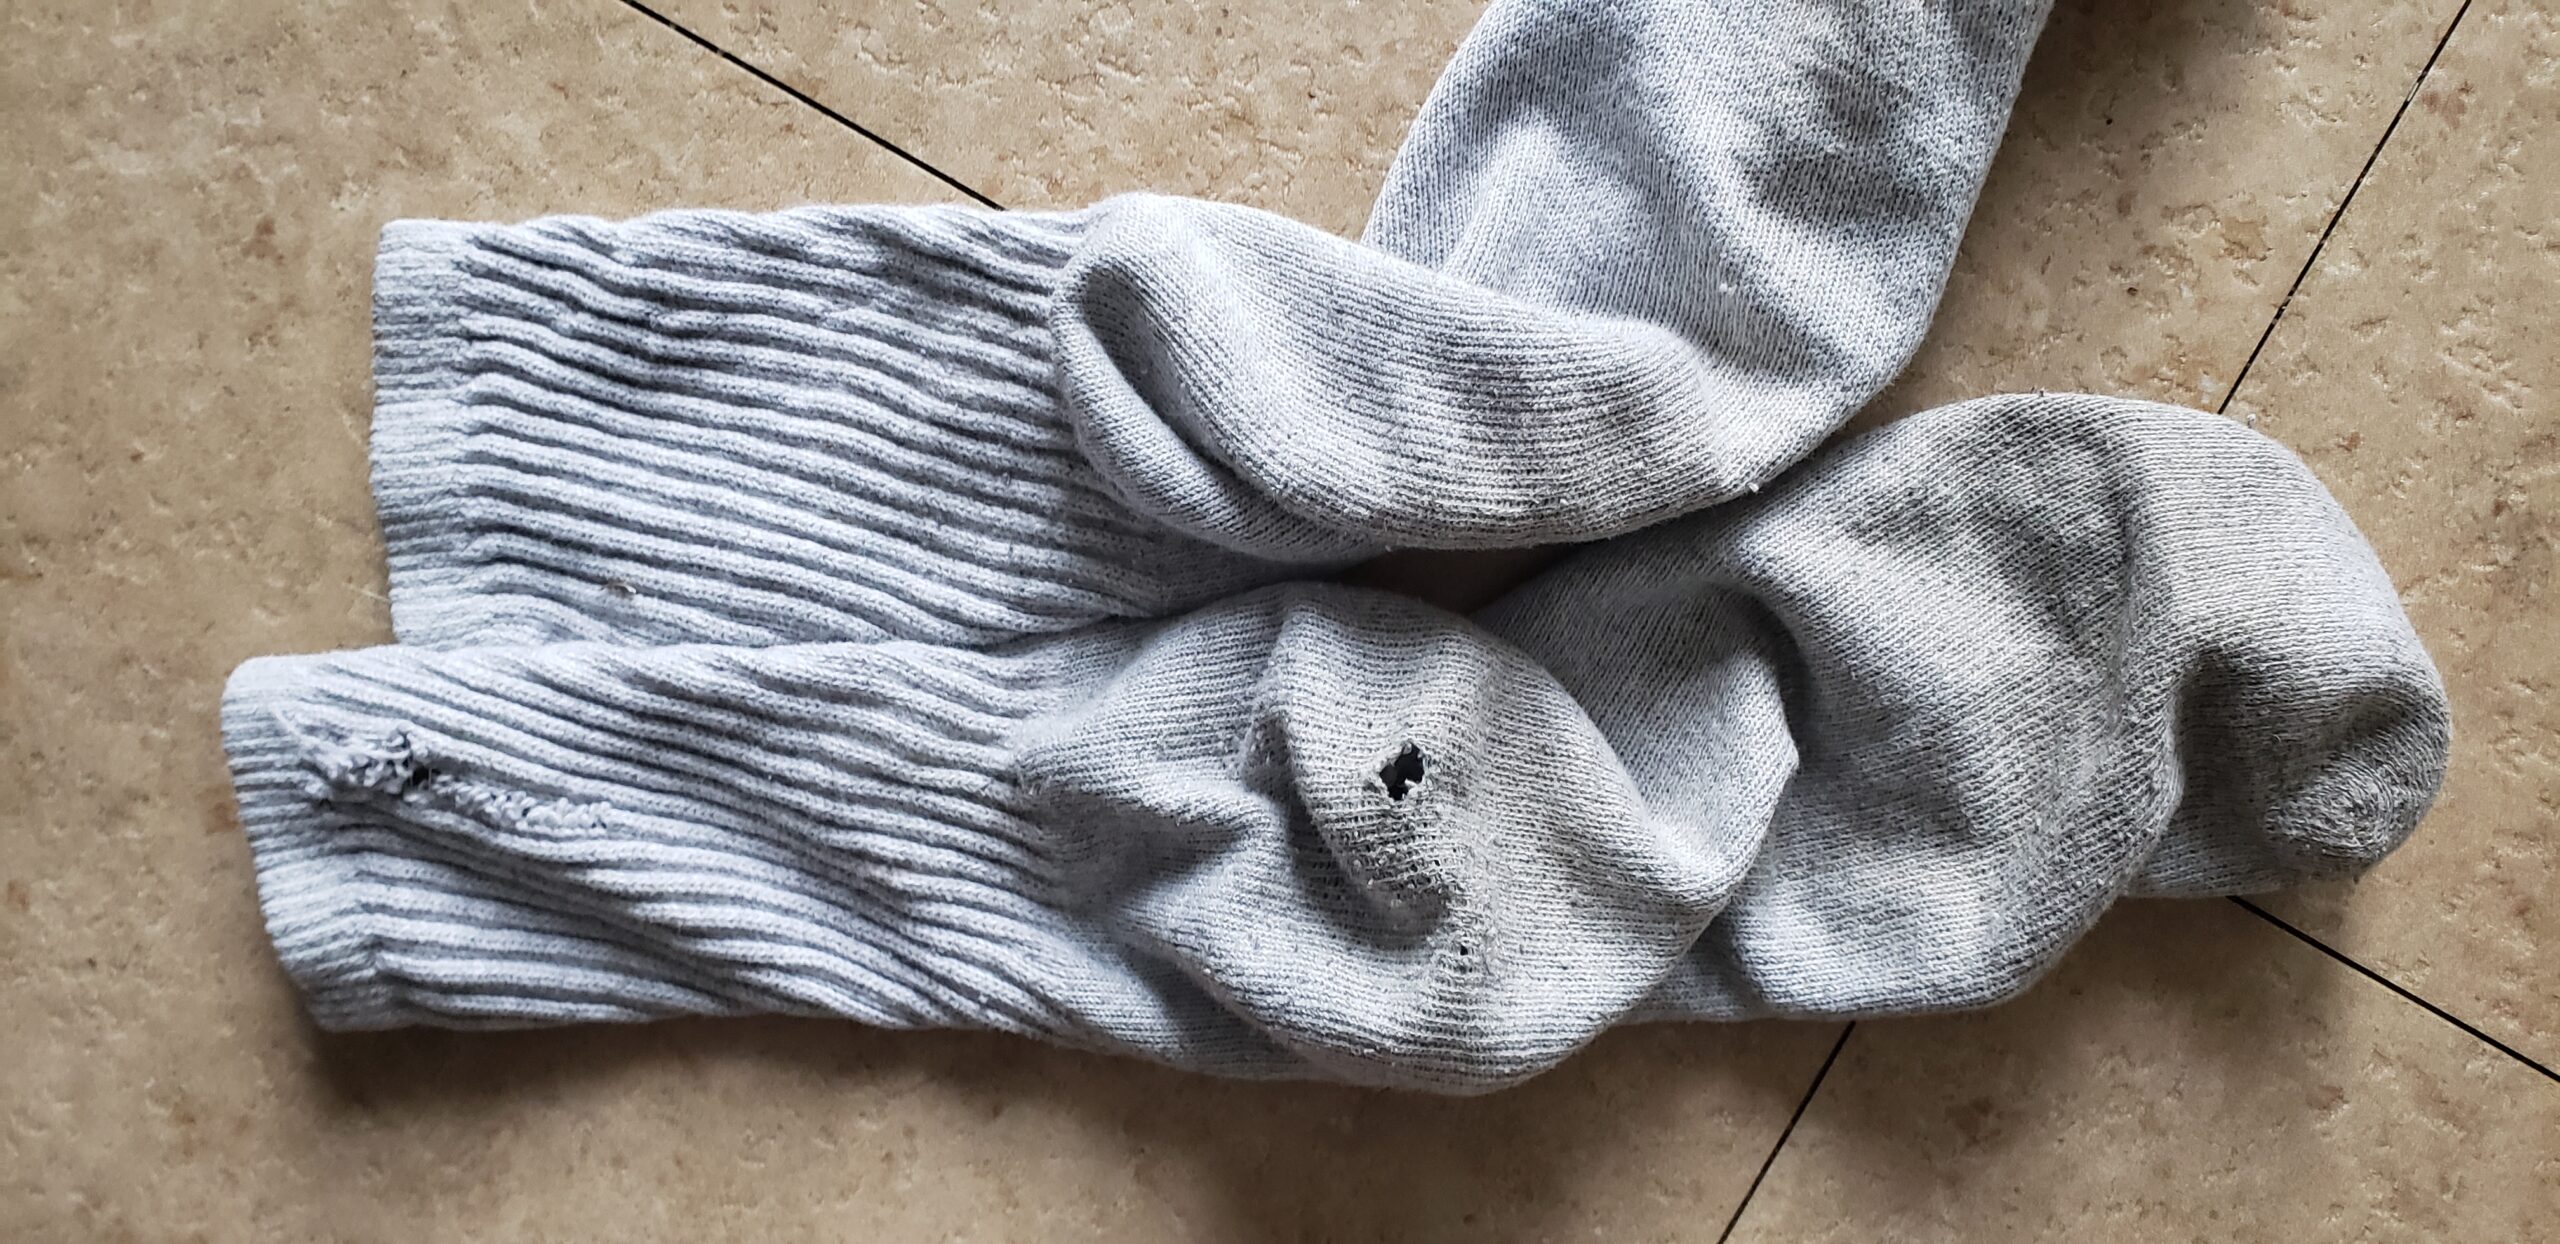 How do you handle this sock dilemma?